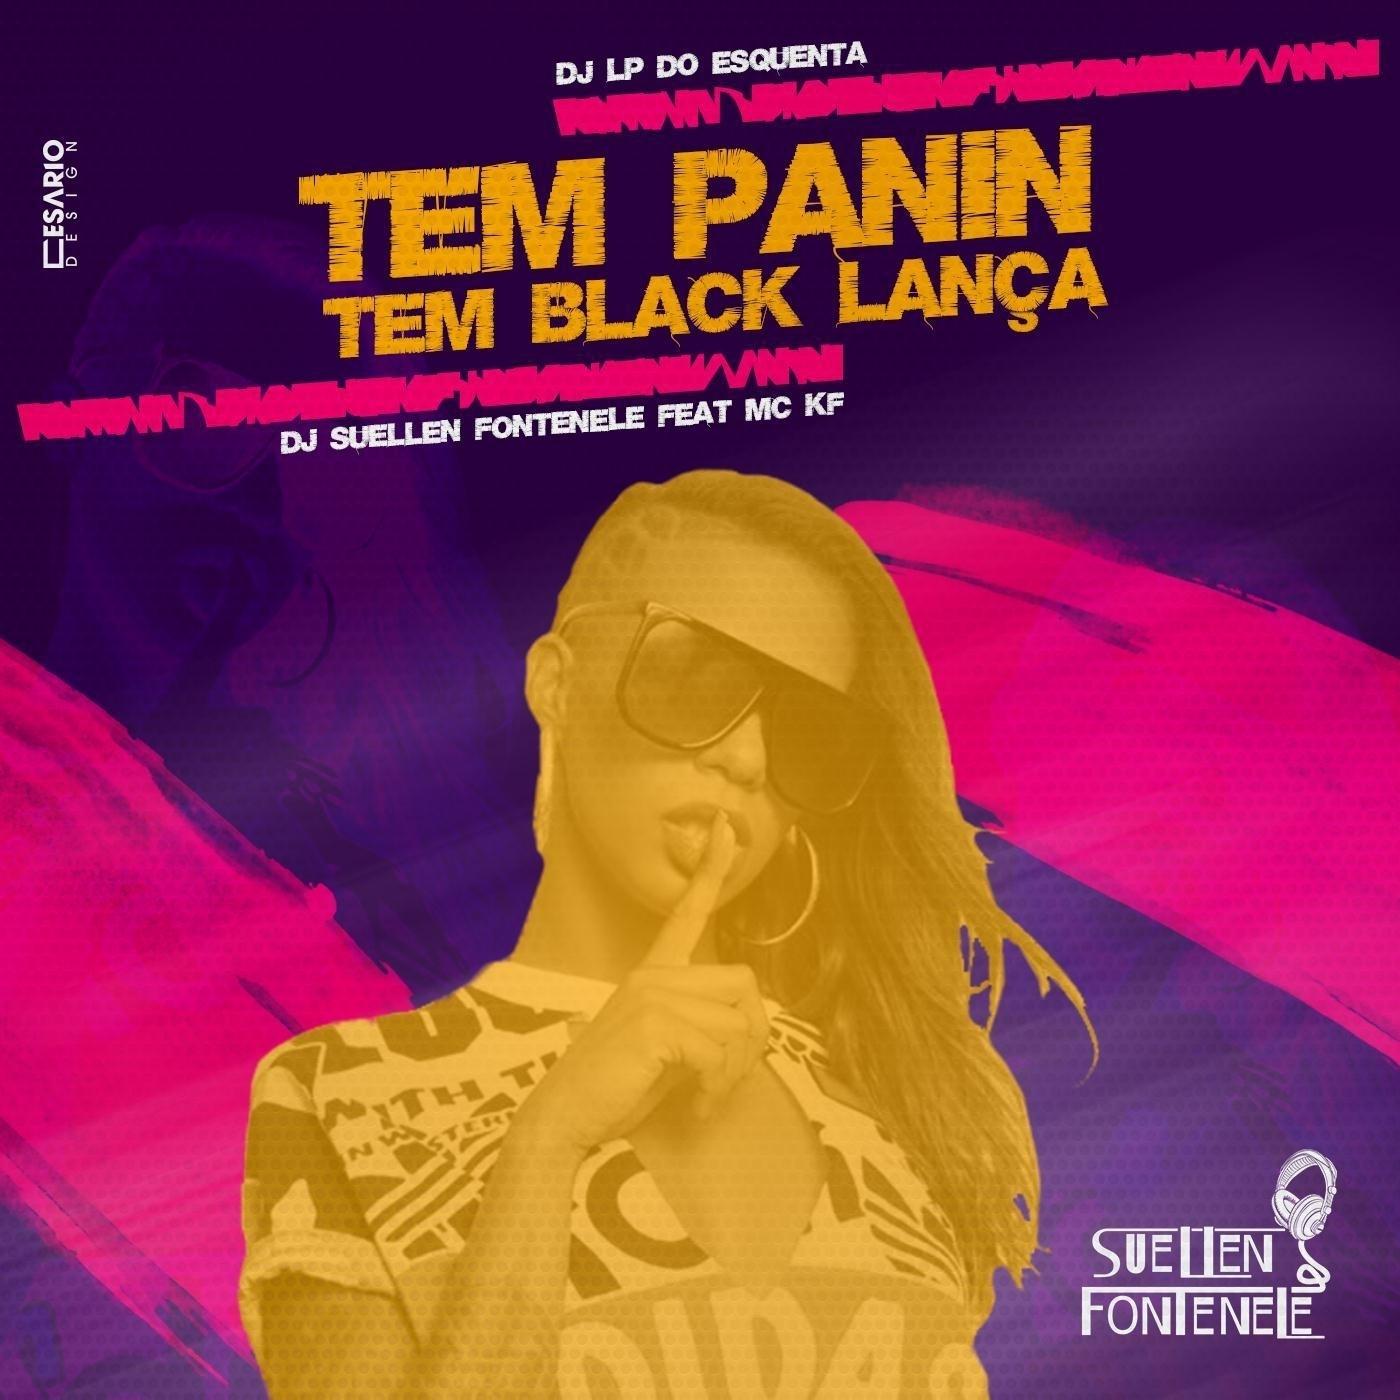 DJ Suellen Fontenele - Tem Panin, Tem Black Lança